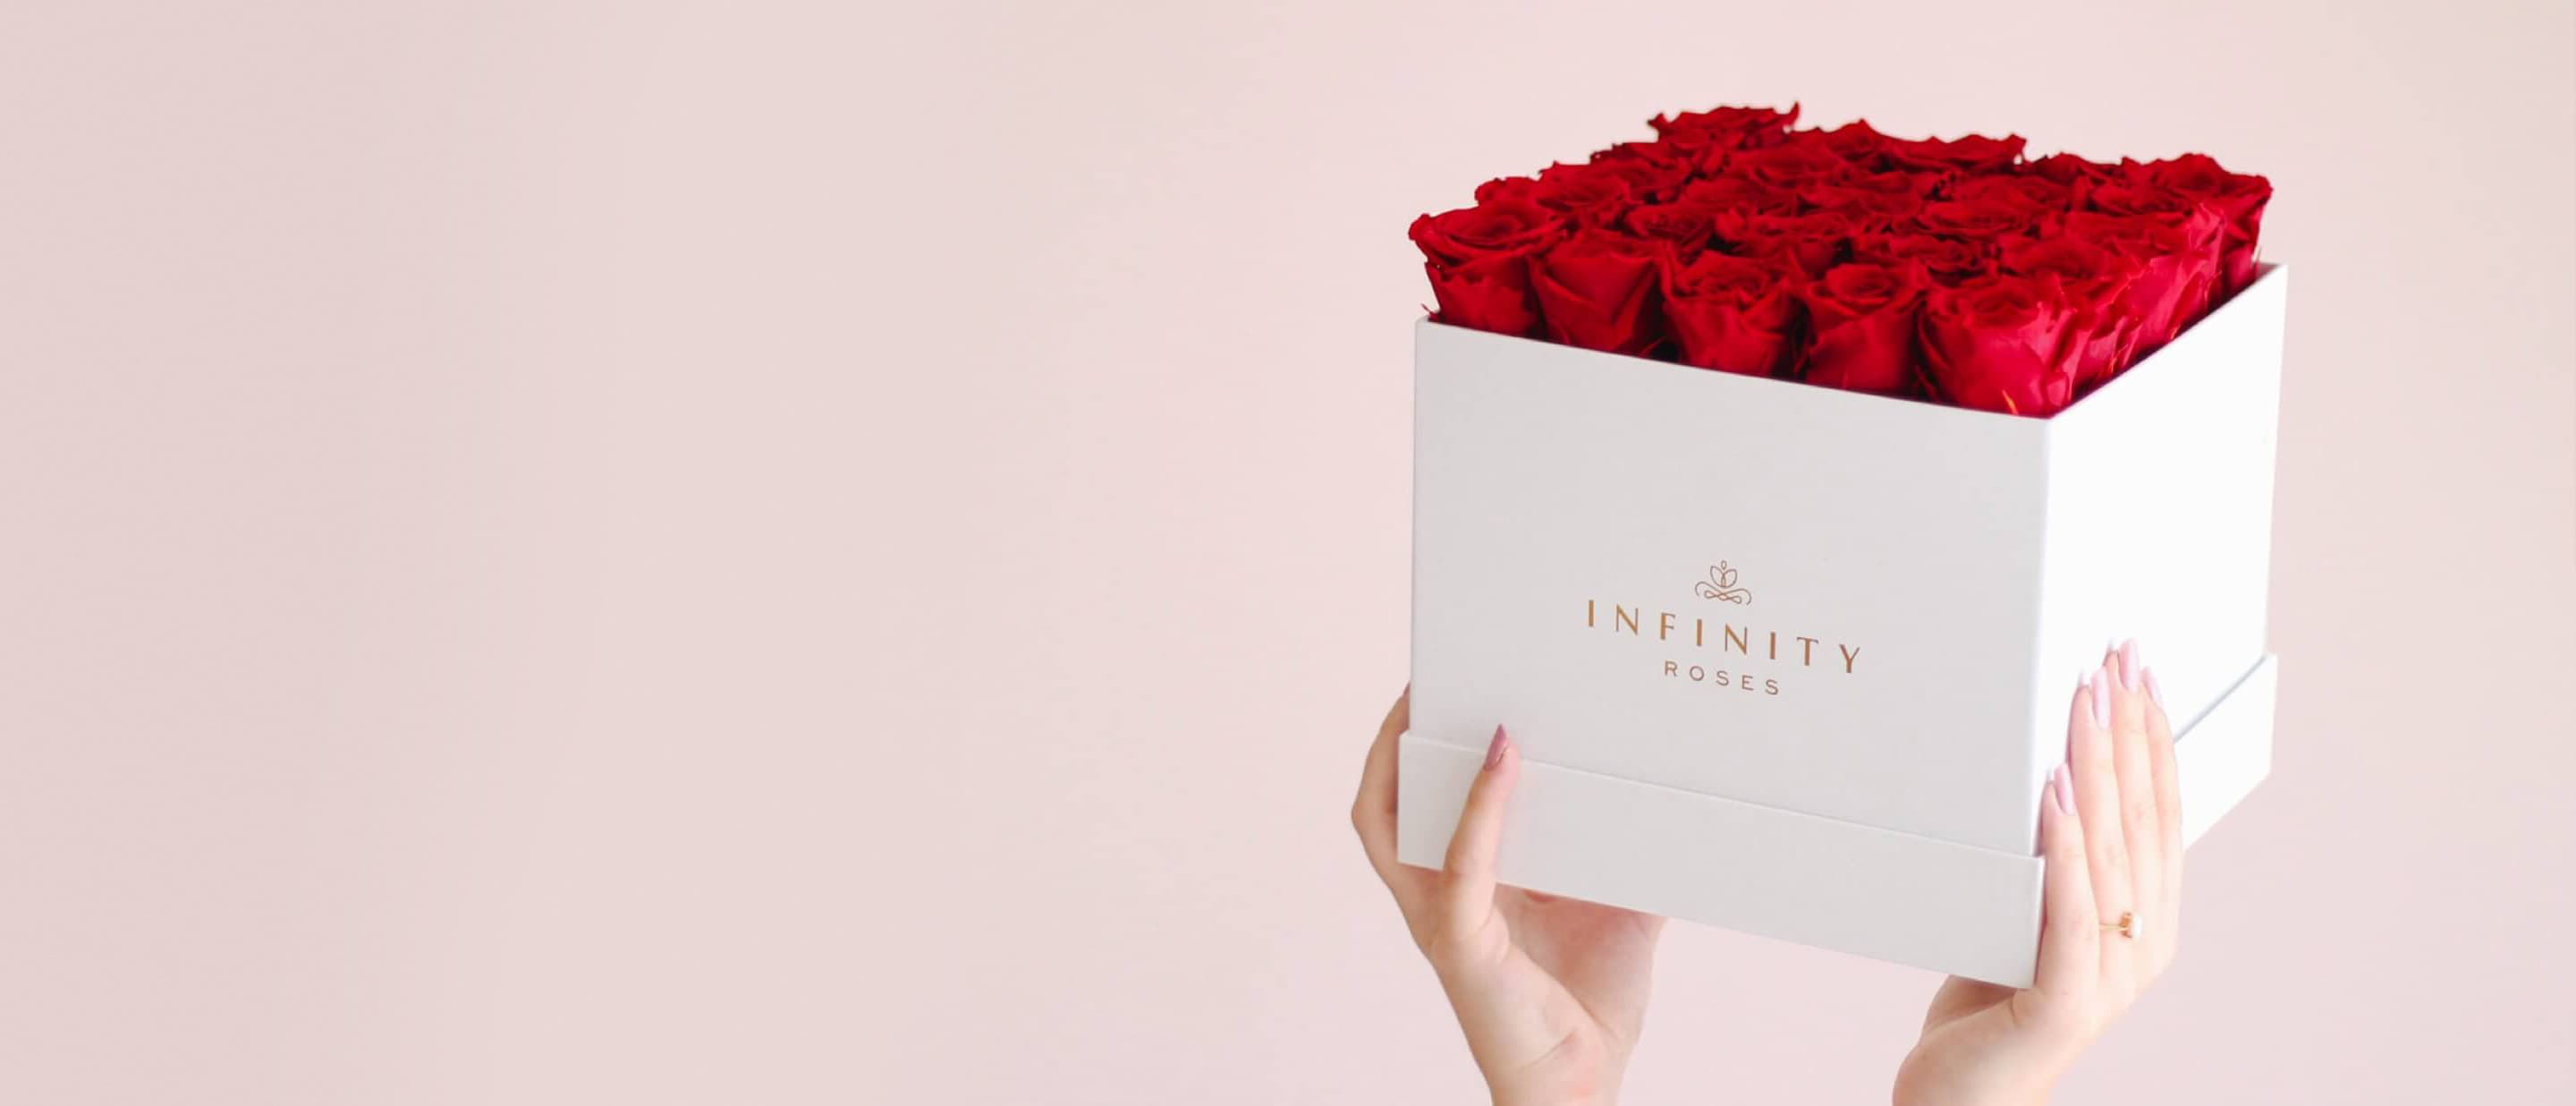 infinity box gift